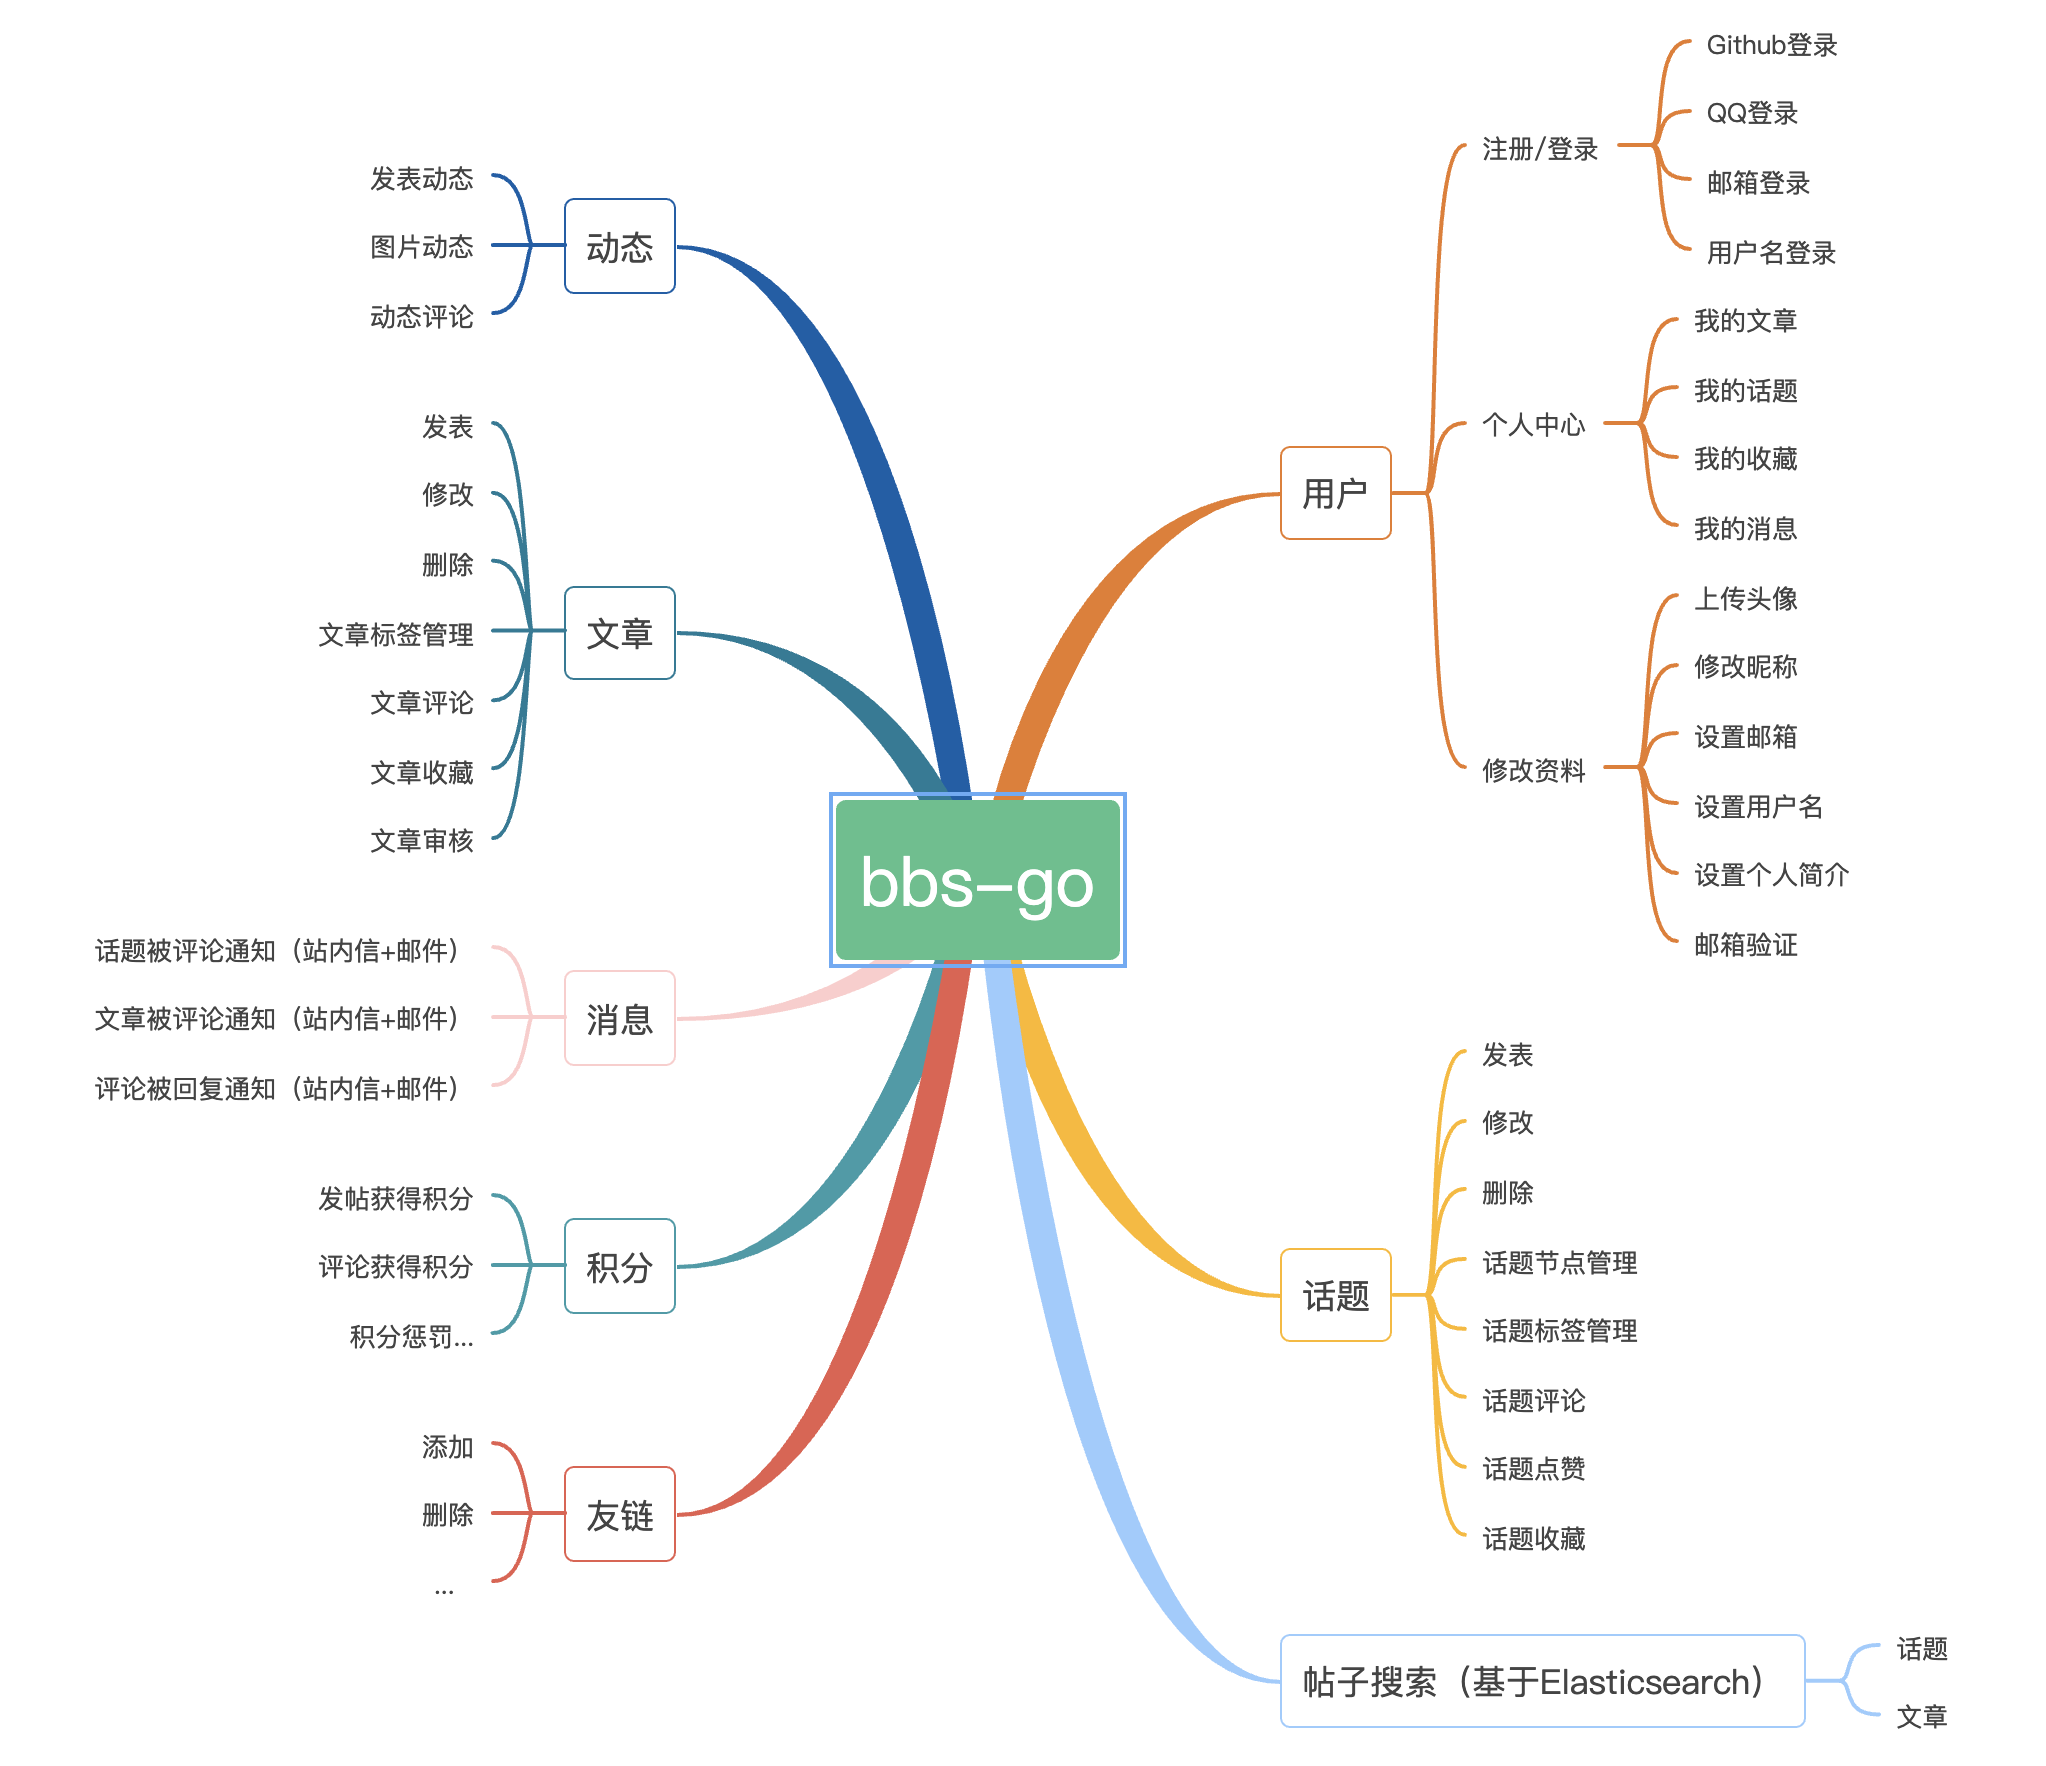 Go 语言开源社区系统 BBS-GO 3.2.6 发布，新增反作弊系统